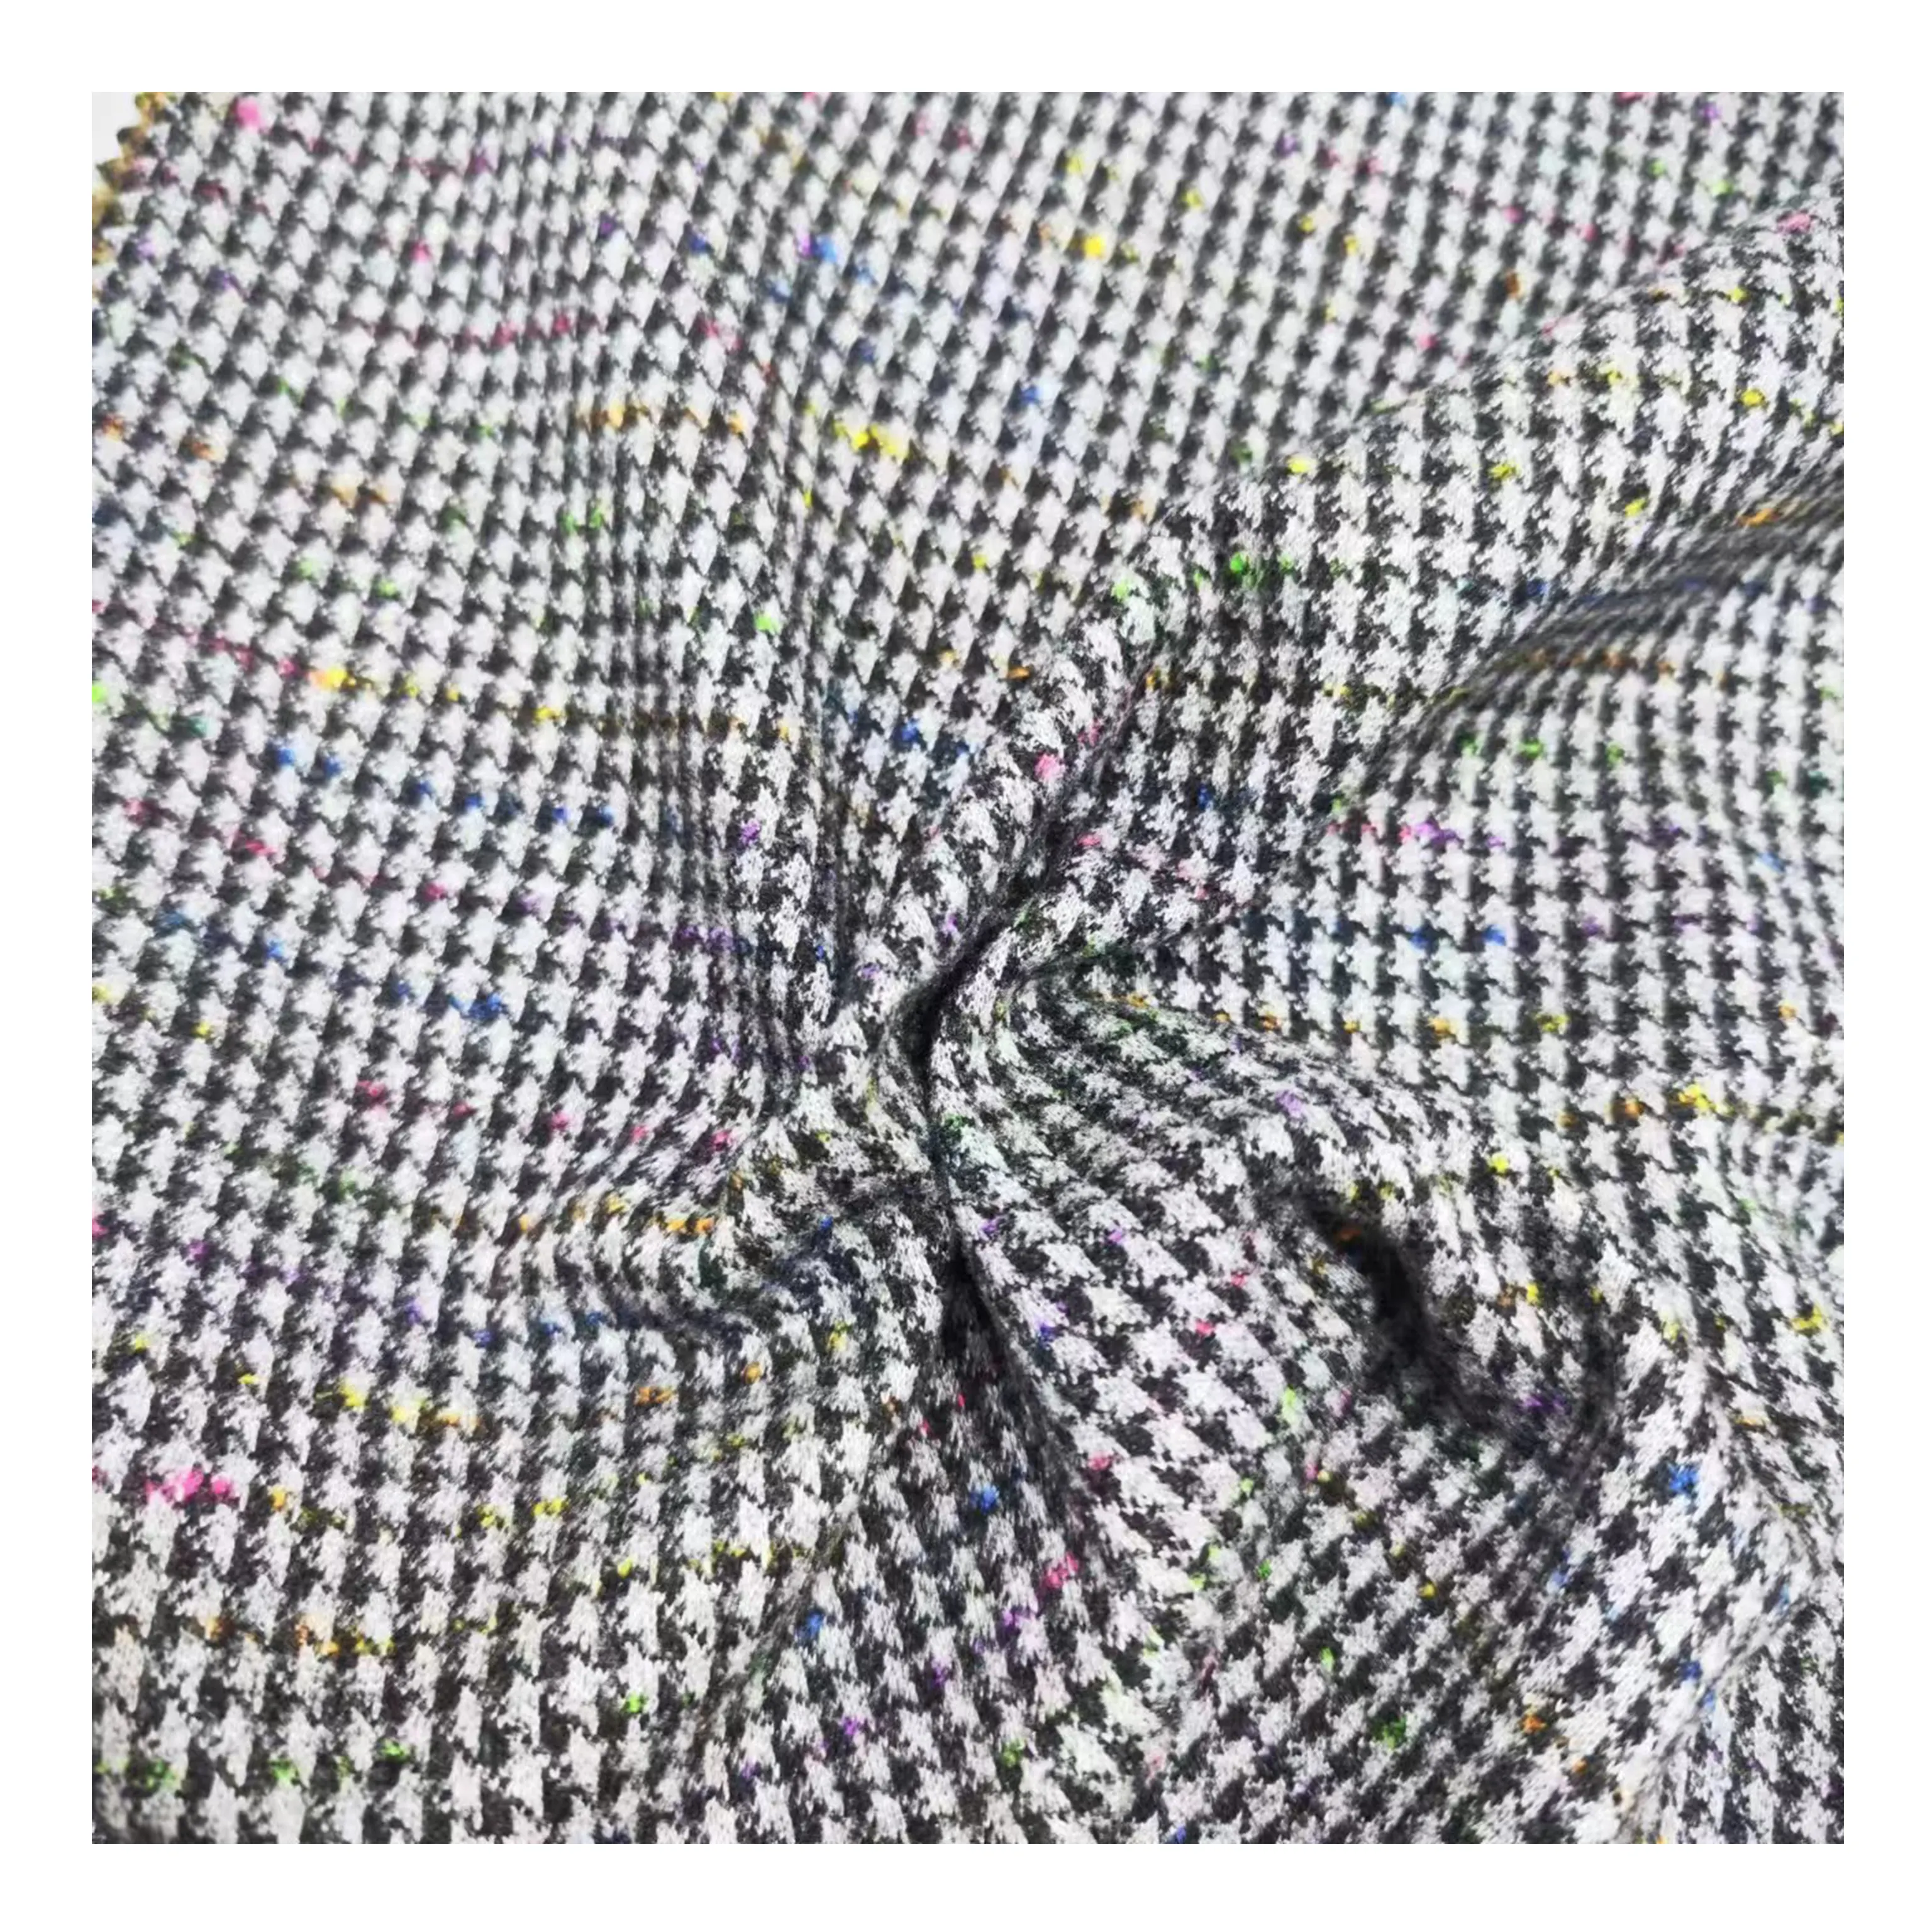 Polyester Rayon Spandex sợi nhuộm kiểm tra chải Áo len Tweed hacci Spun vải dệt kim